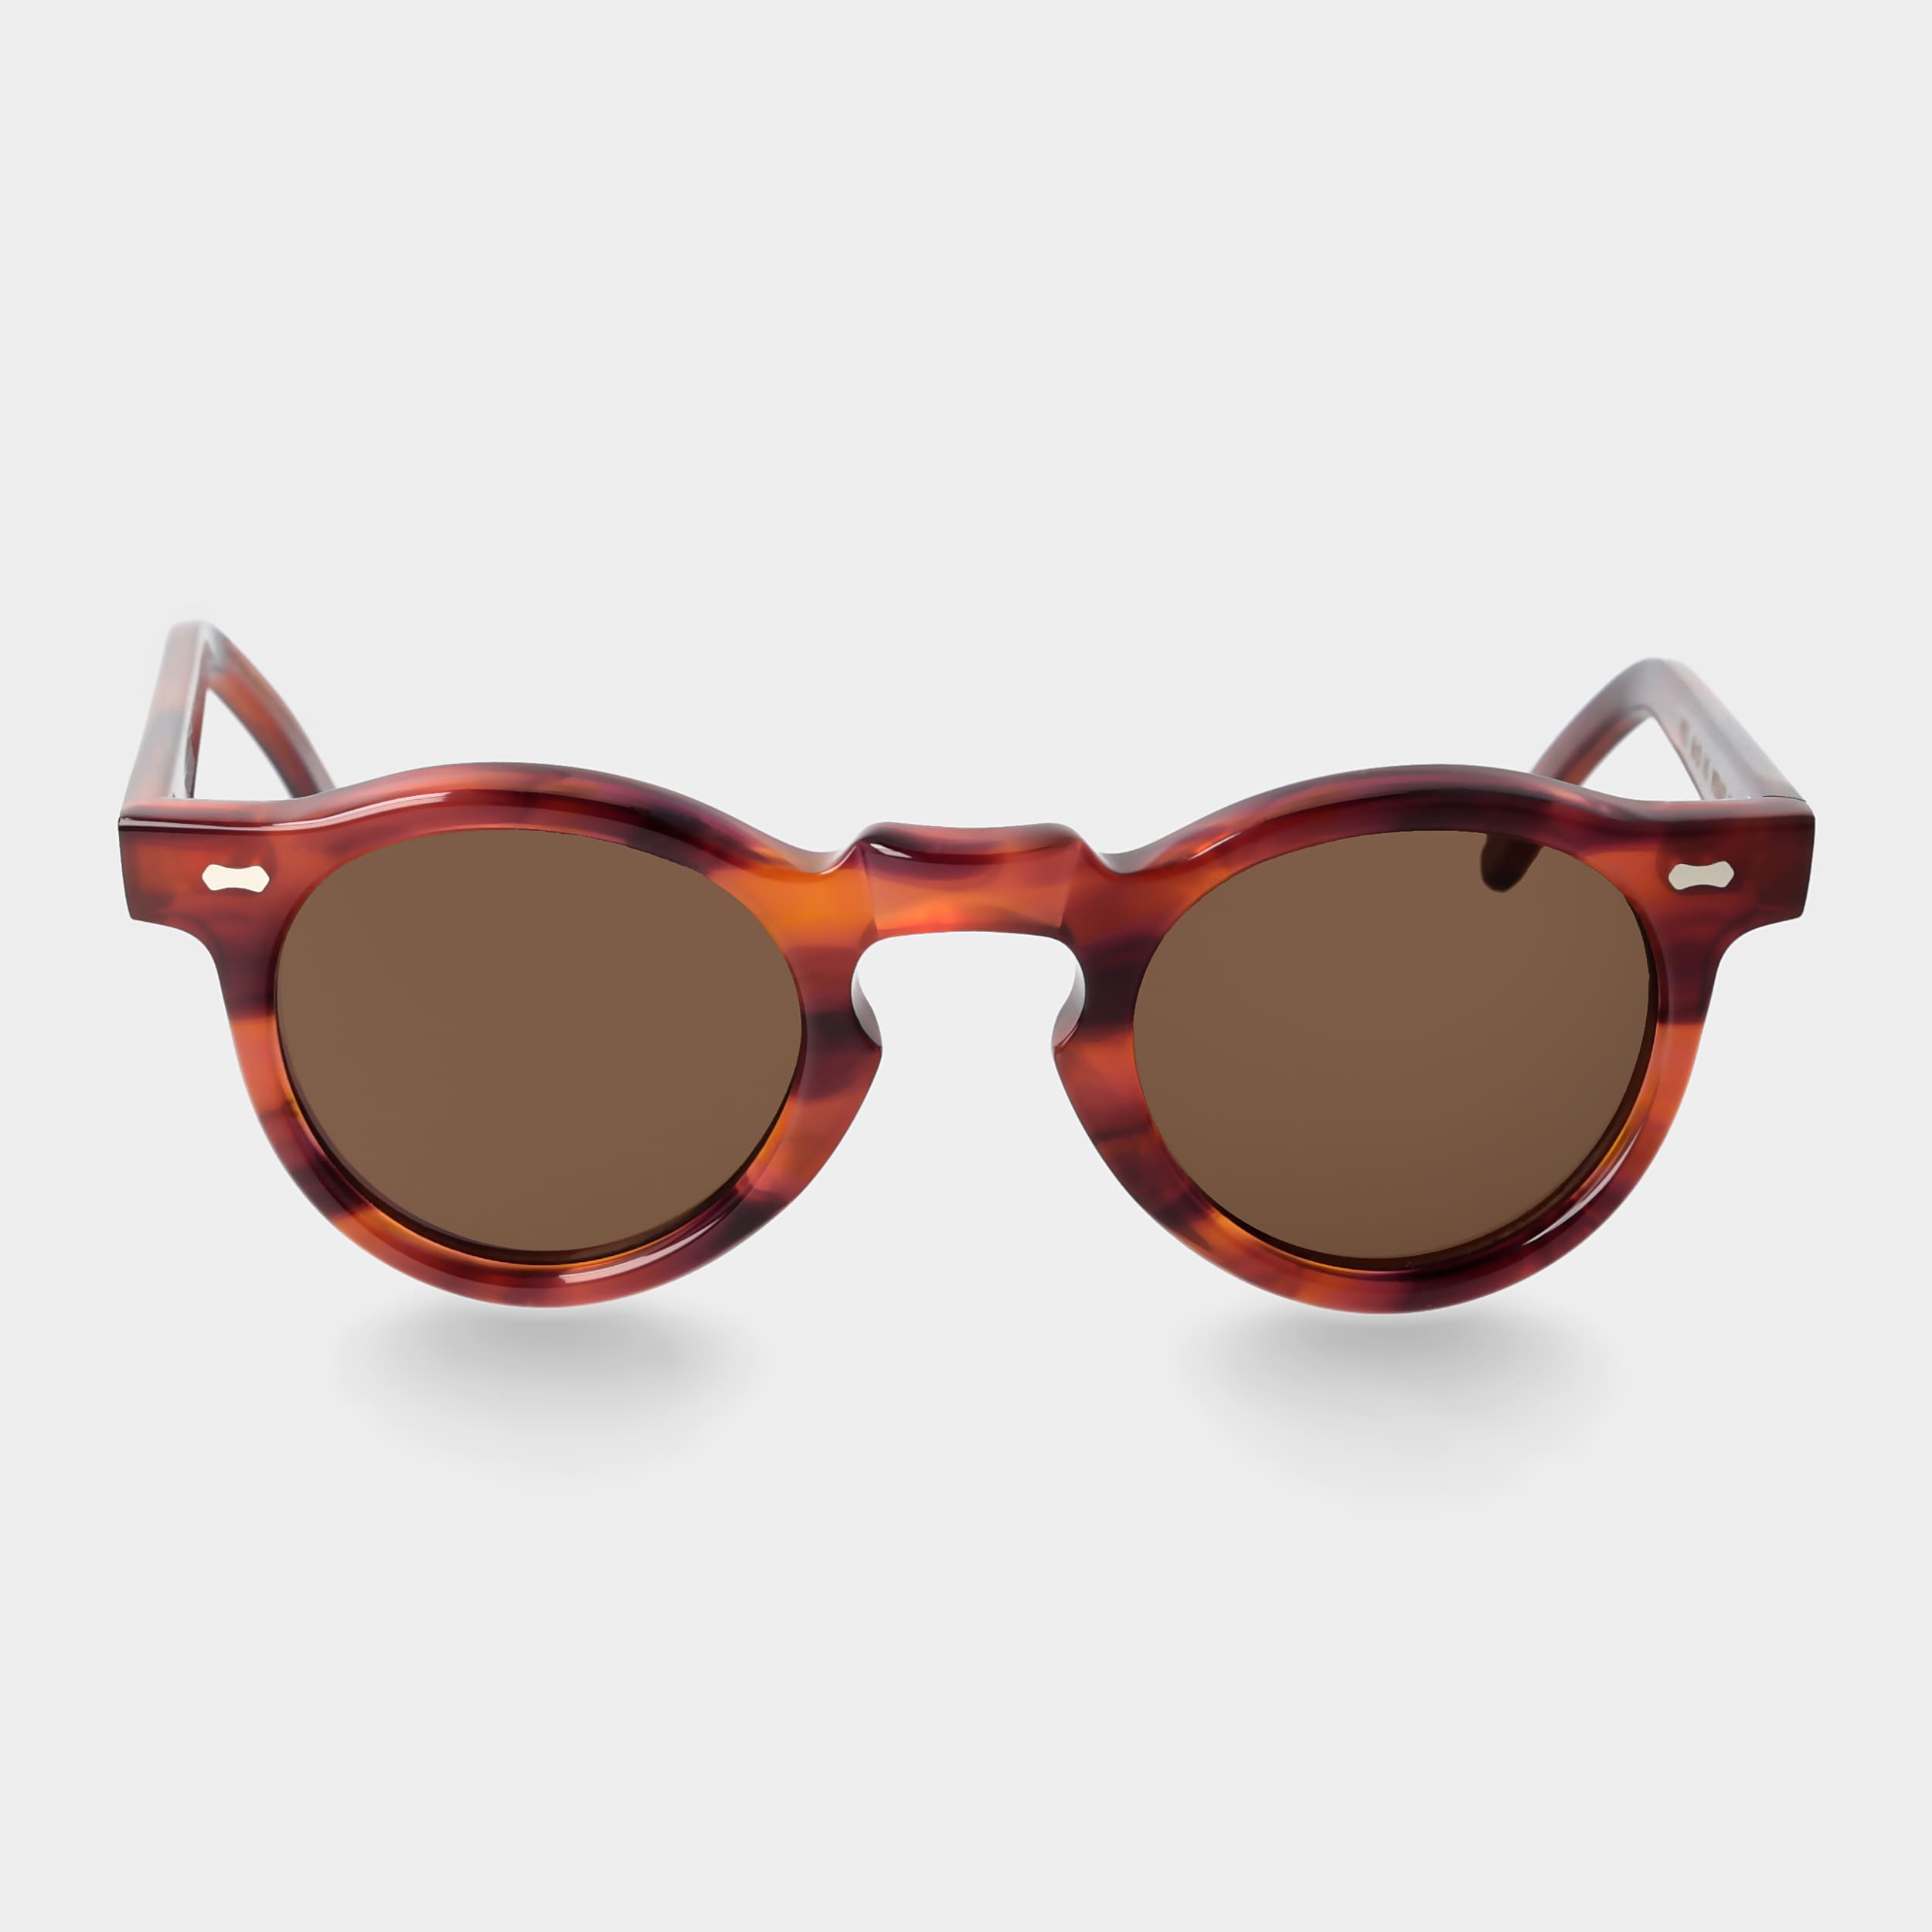 Sunglasses with Brown Lenses, handmade in Italy | TBD Eyewear